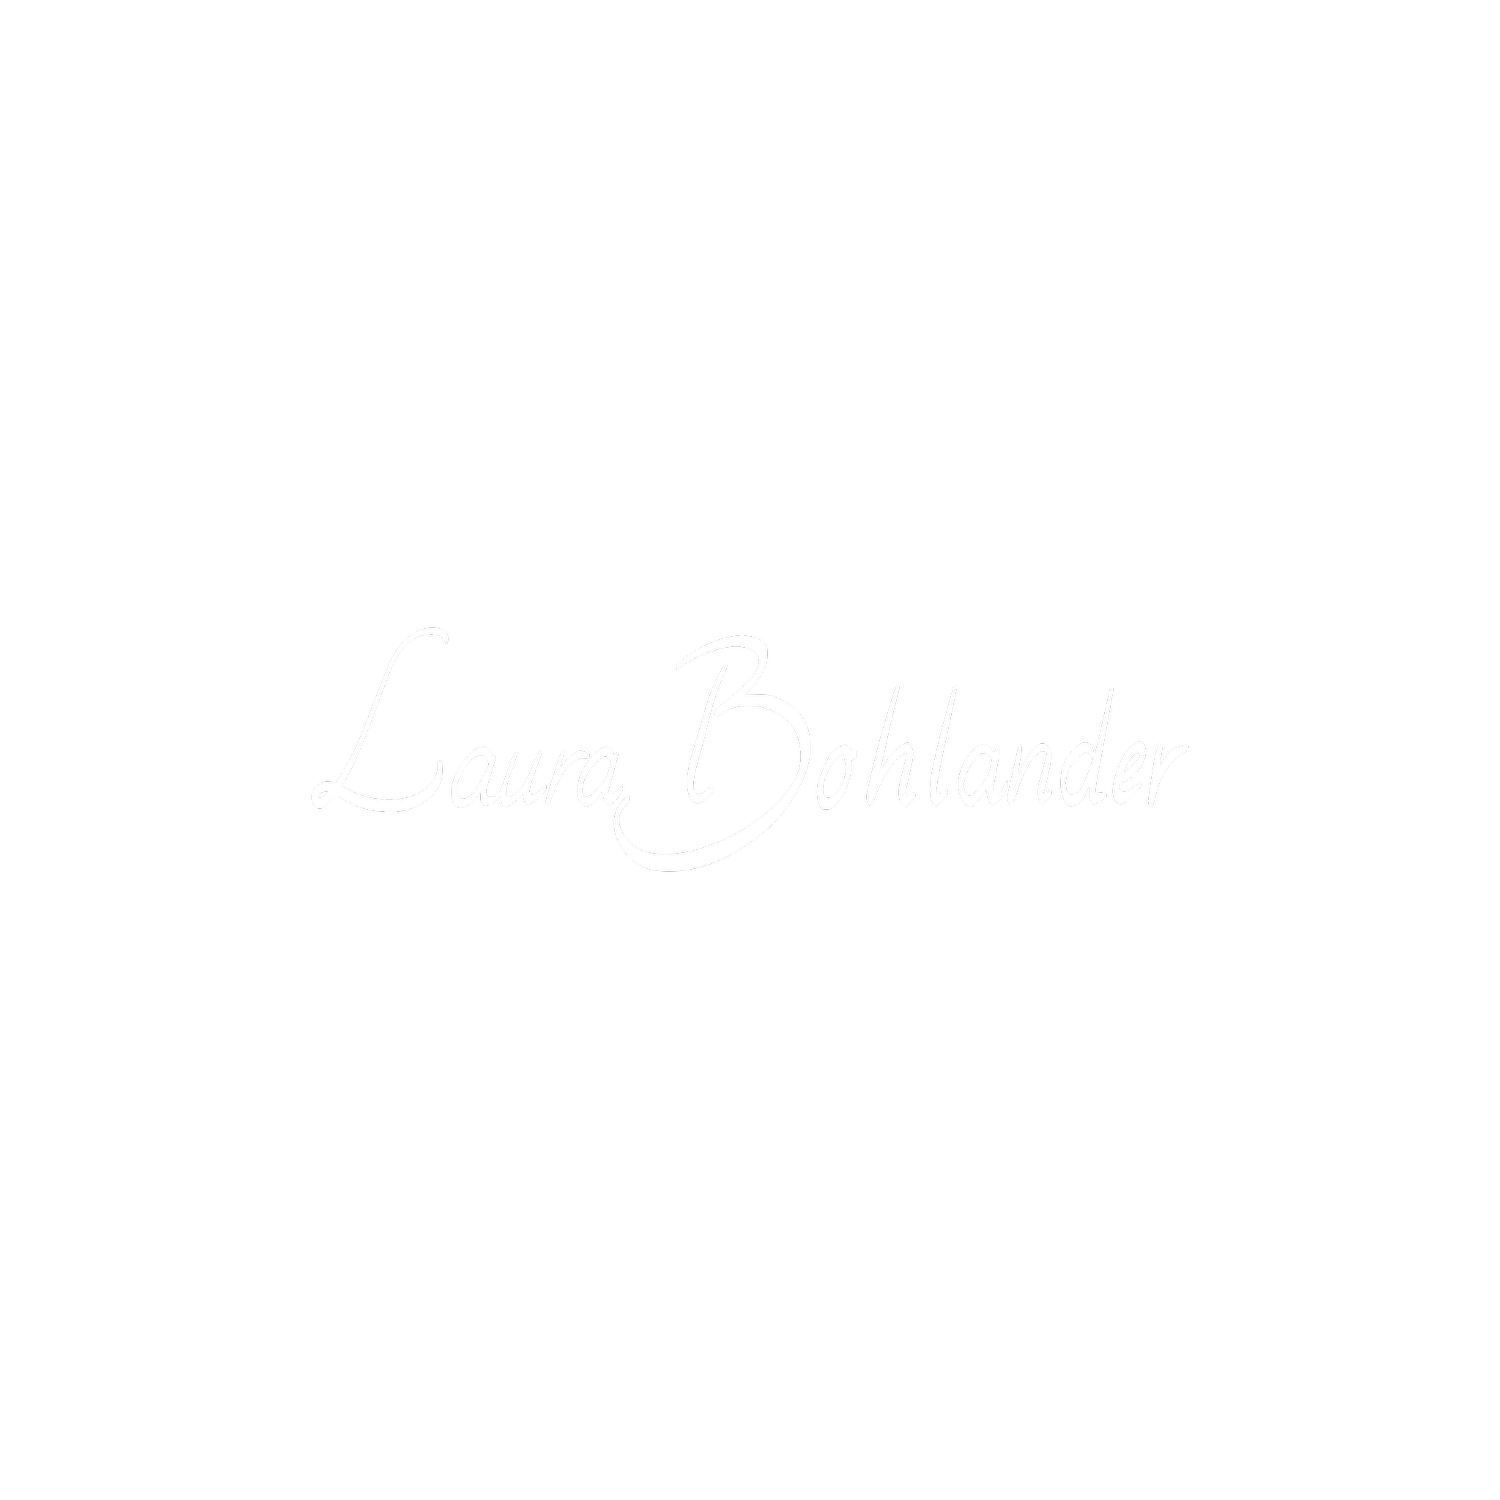 Laura Bohlander